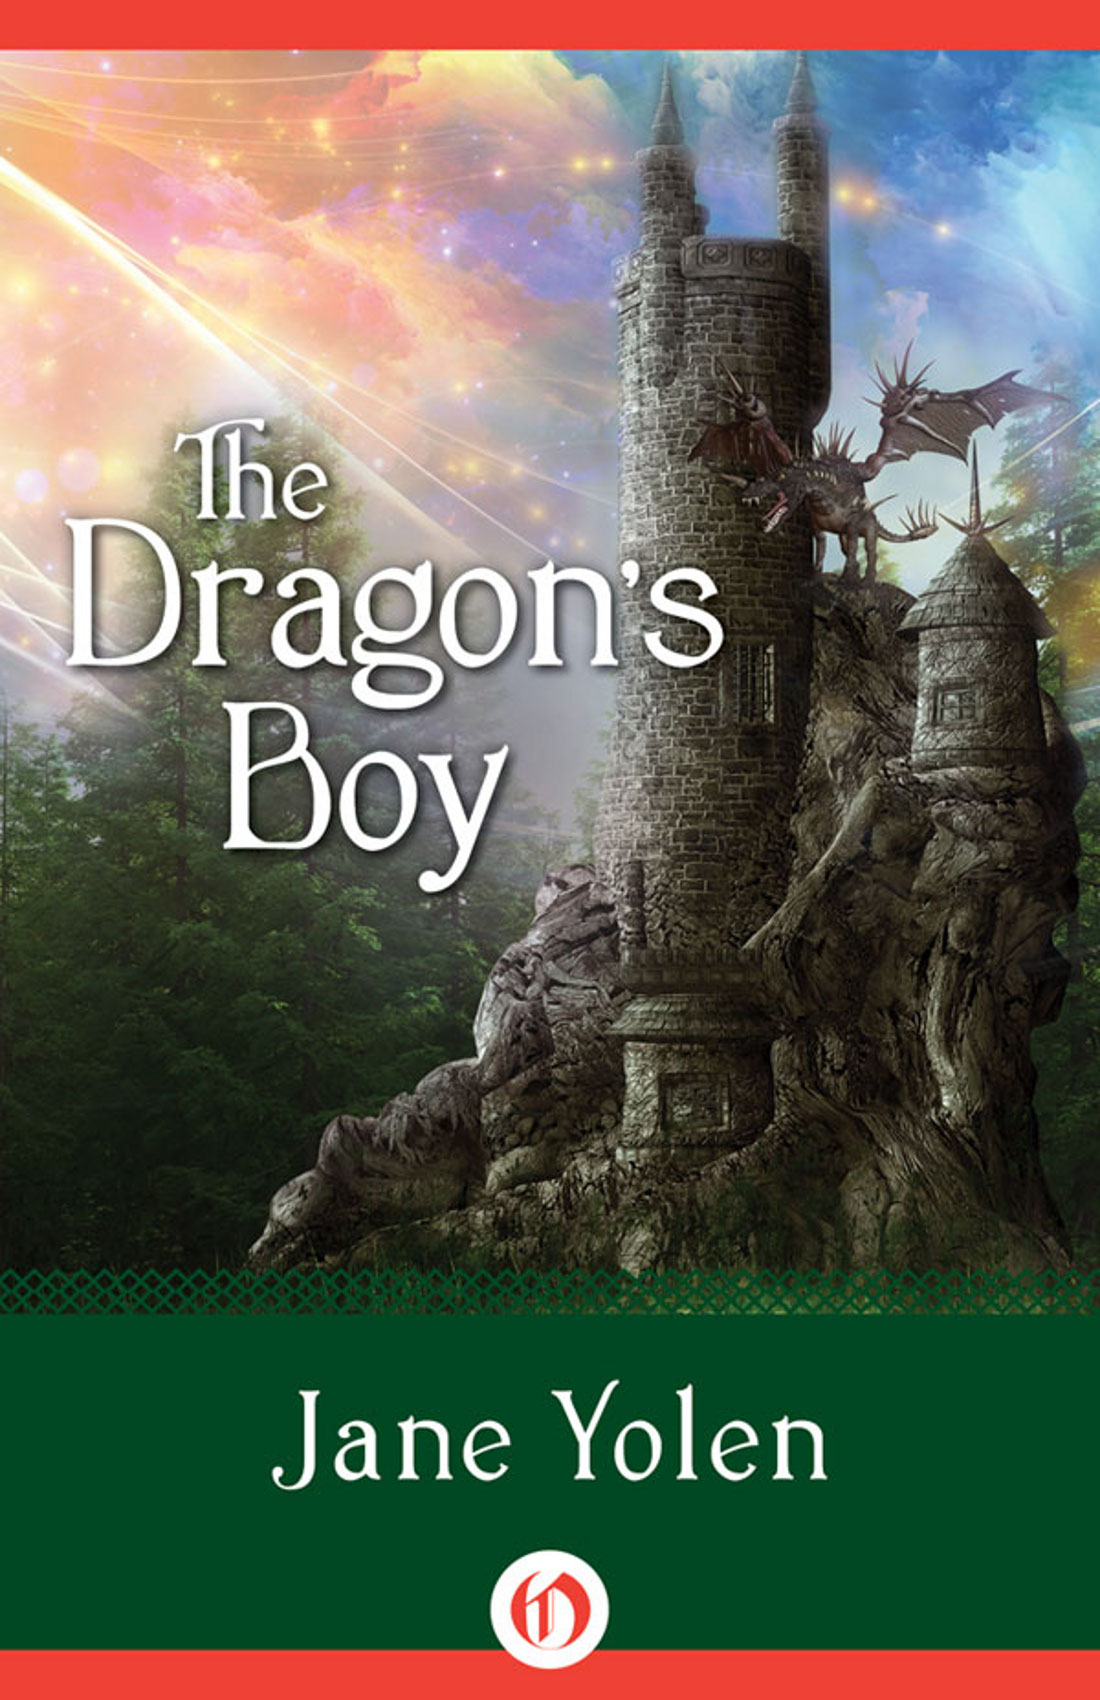 Dragon's Boy by Jane Yolen